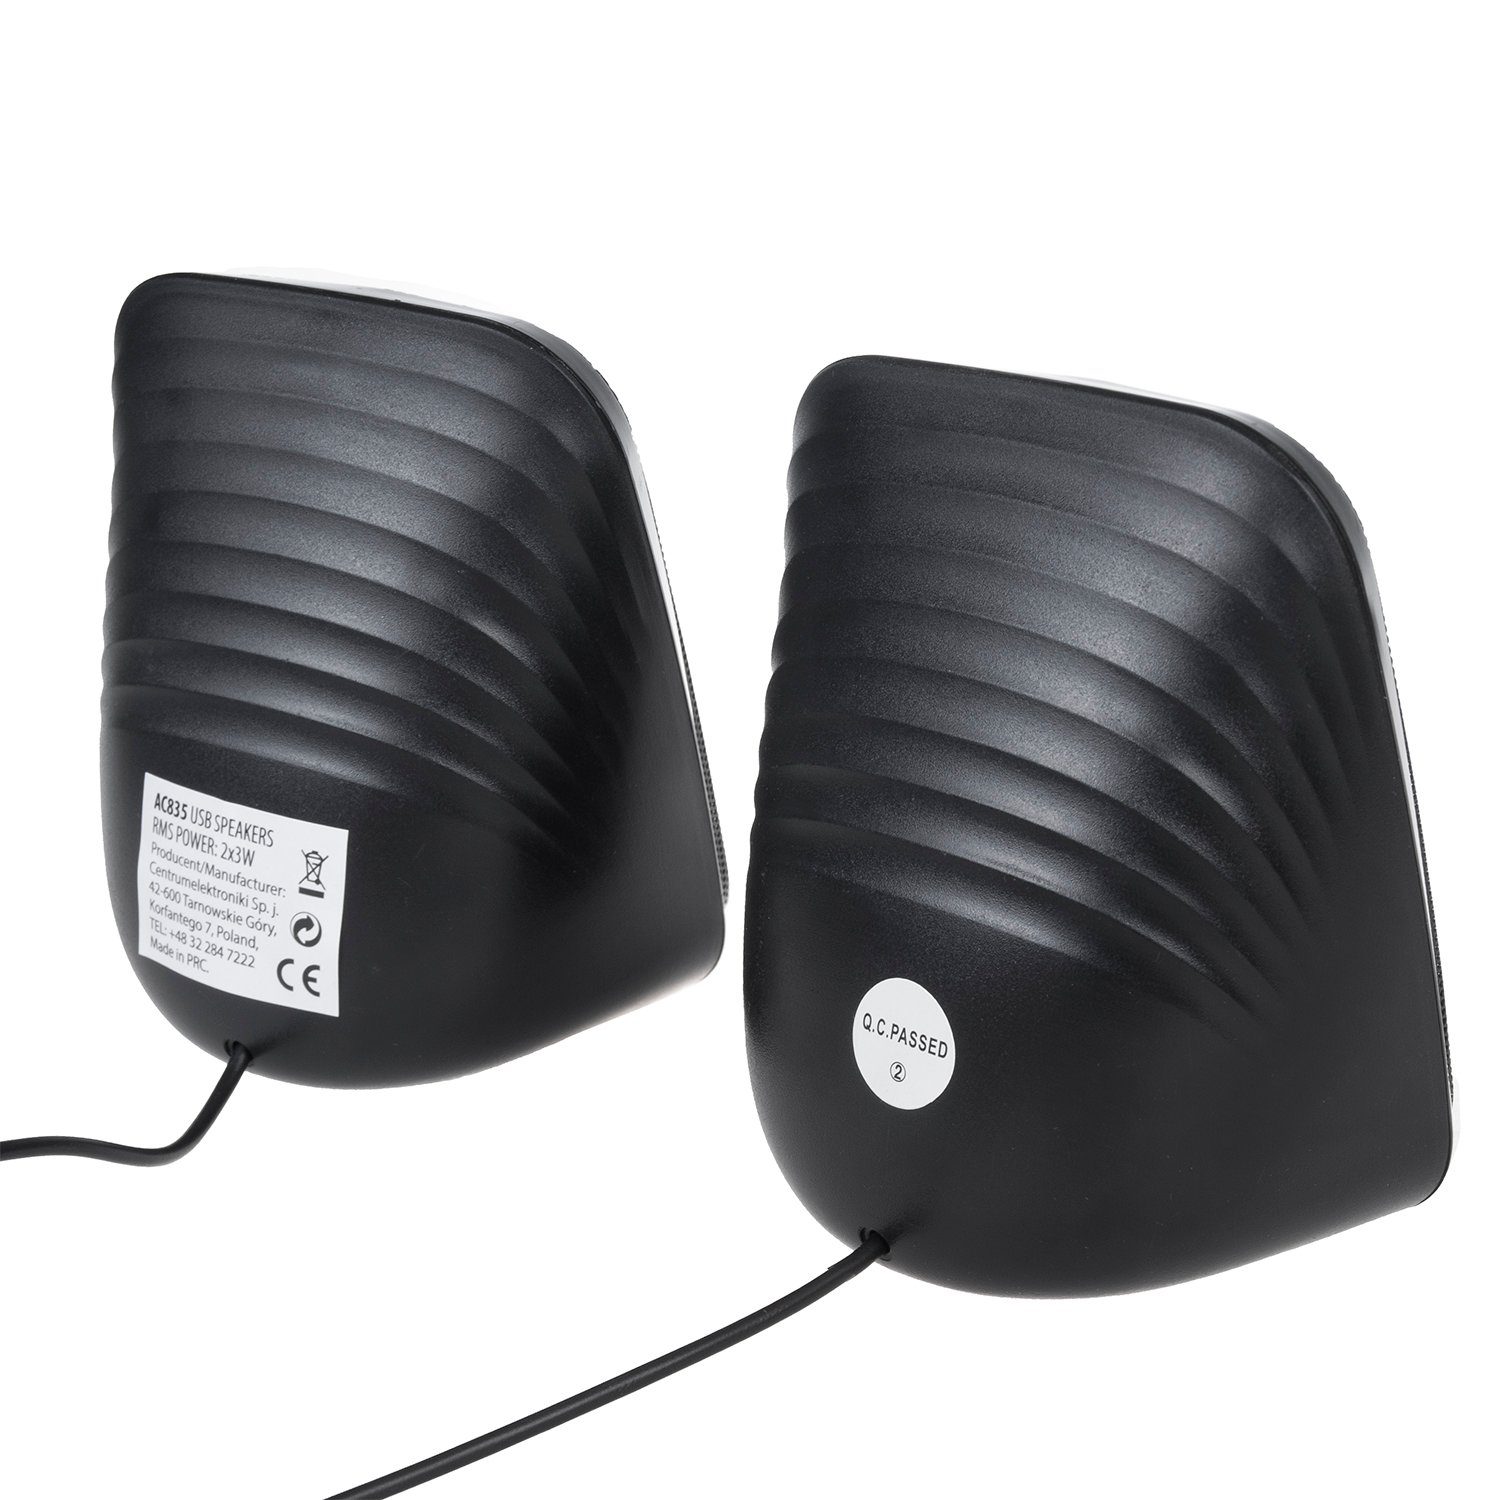 AUX [3,5mm] 2.0 W, AC835 Hintergrundbeleuchtung, Audiocore Lautstärkeregelung) (6 Klinkenstecker, PC-Lautsprecher